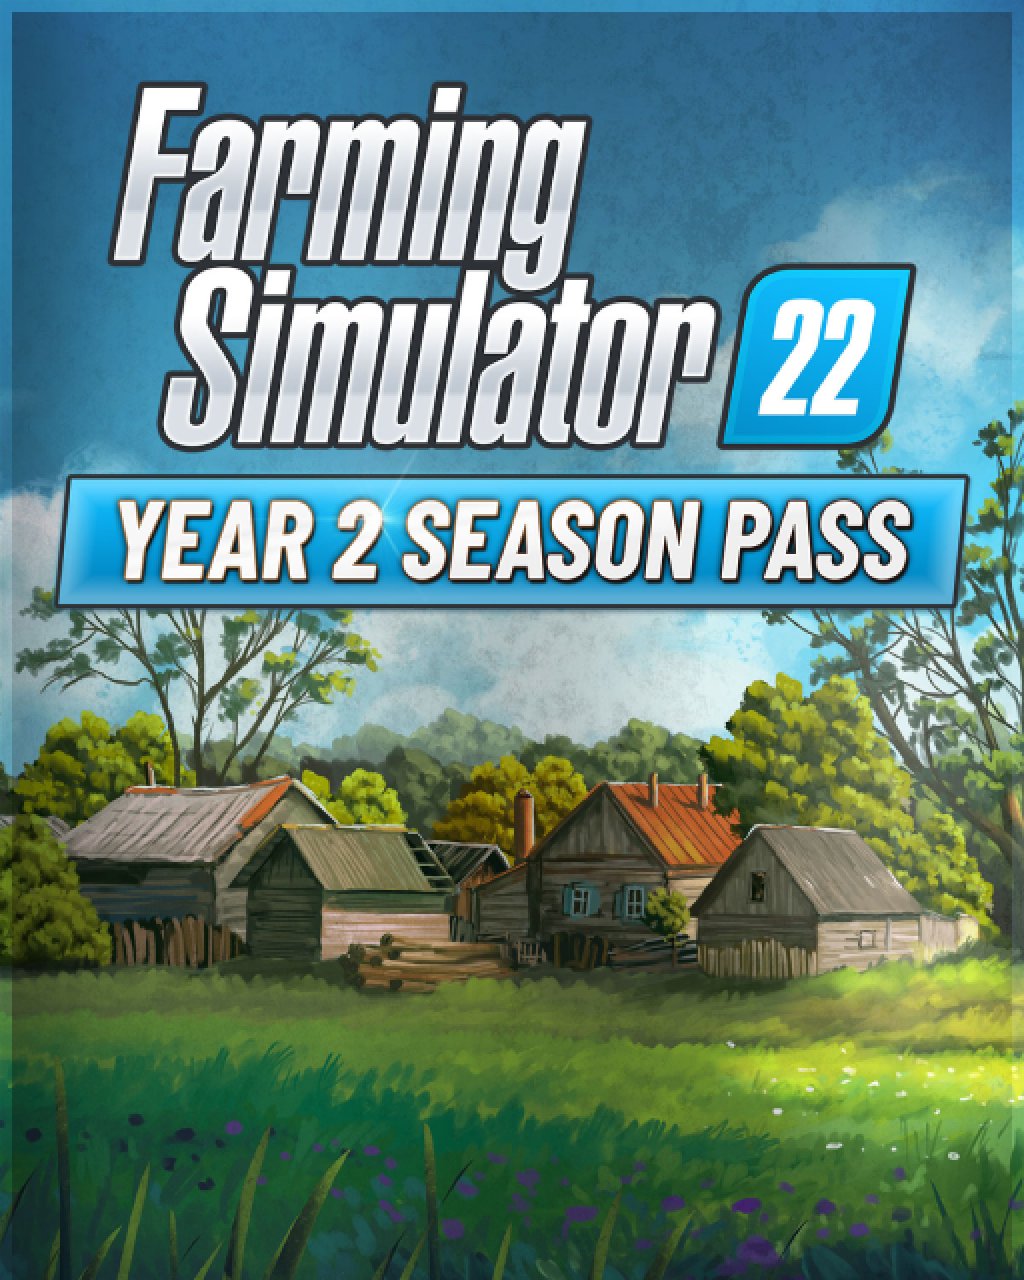 Obrázek ESD Farming Simulator 22 Year 2 Season Pass